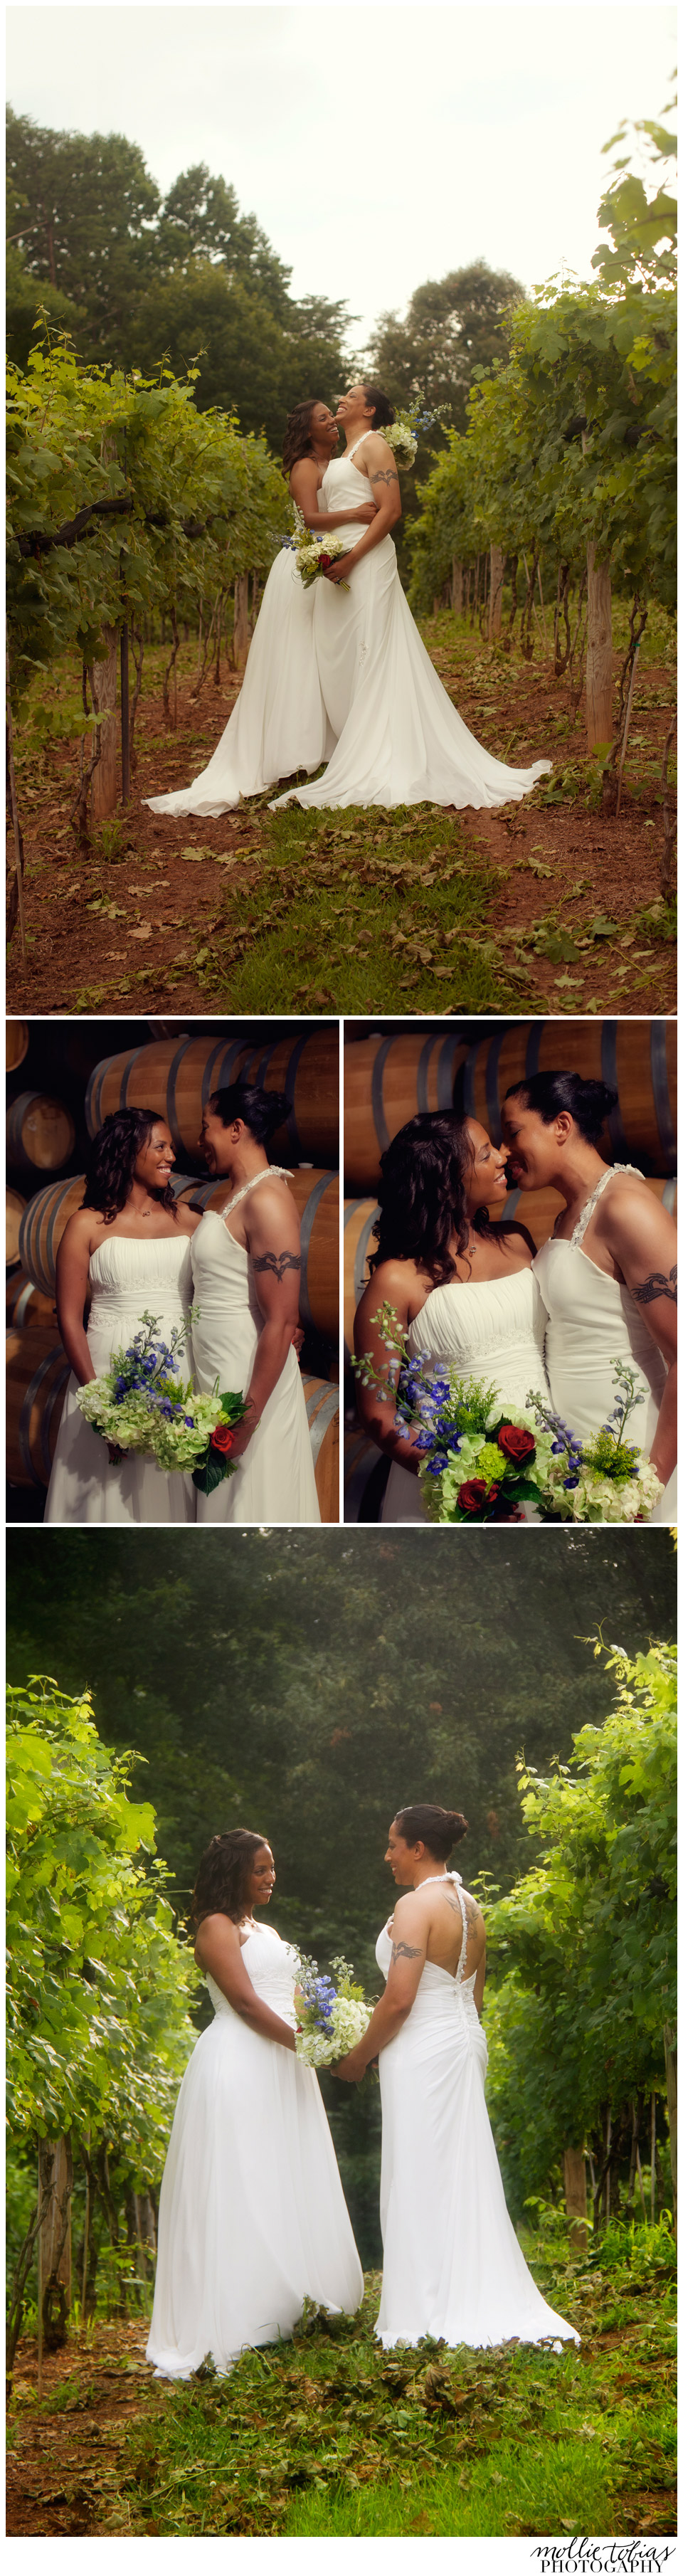 mollie-tobias-Manassas-VA-MD-DC-wedding-photography-Paradise-Springs-winery-same-sex-styled-shoot-couple-portraits-1